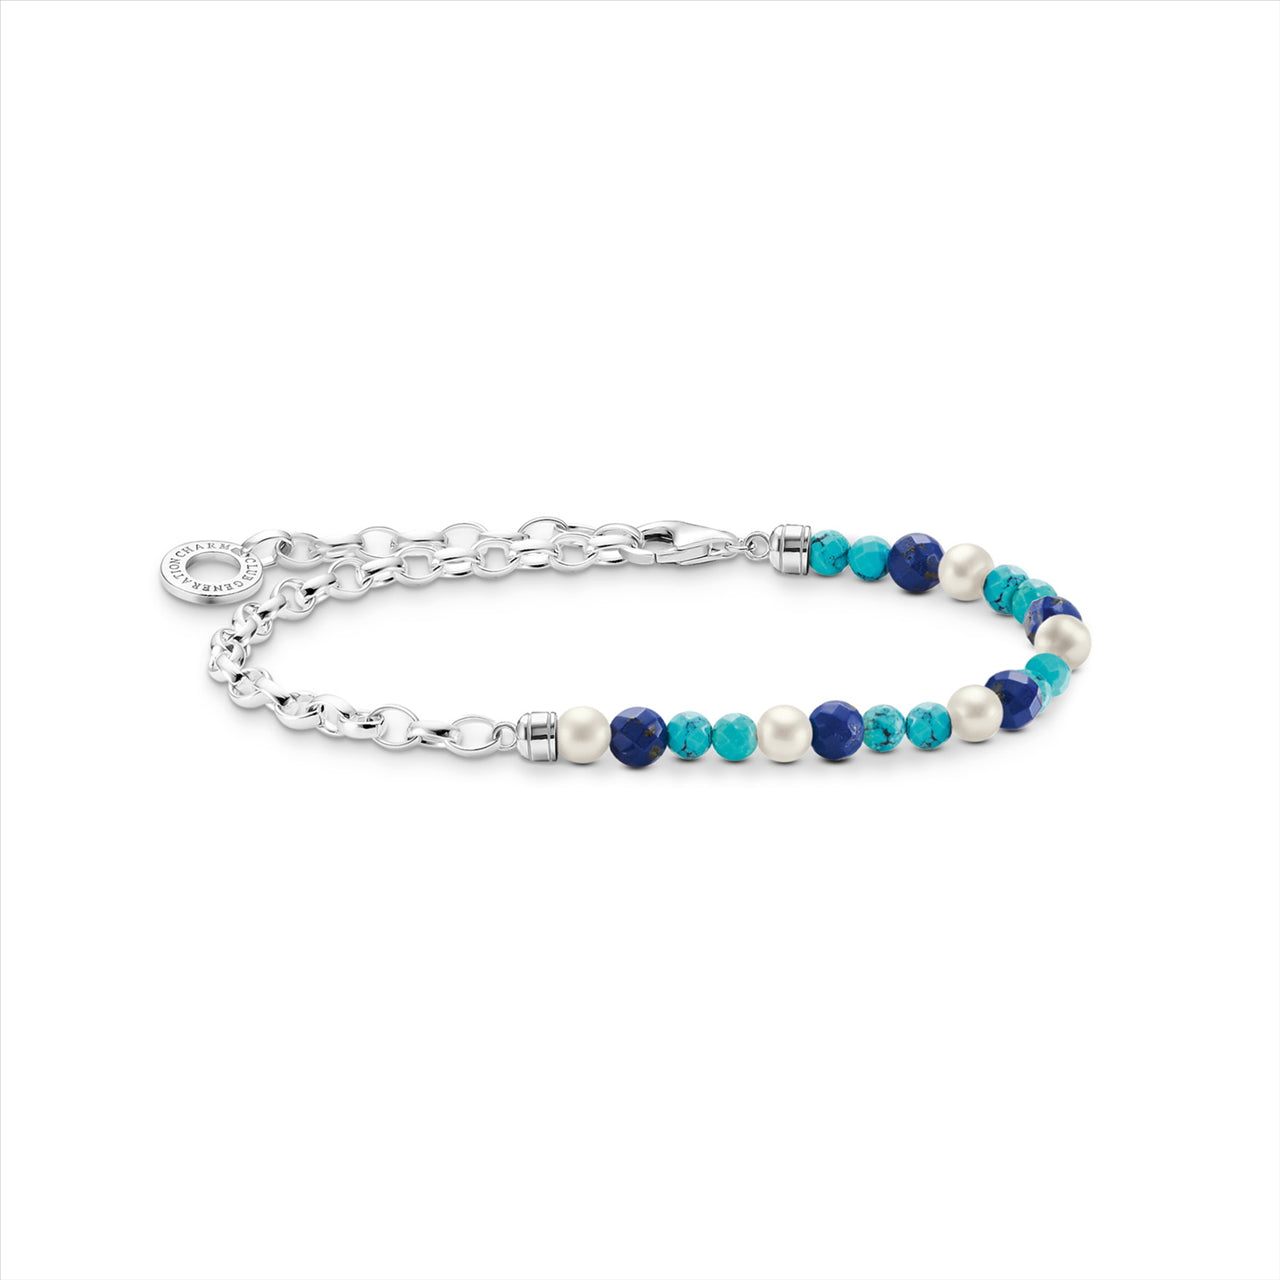 Thomas Sabo Belcher Chain and Lapis Lazuli Beaded bracelet.